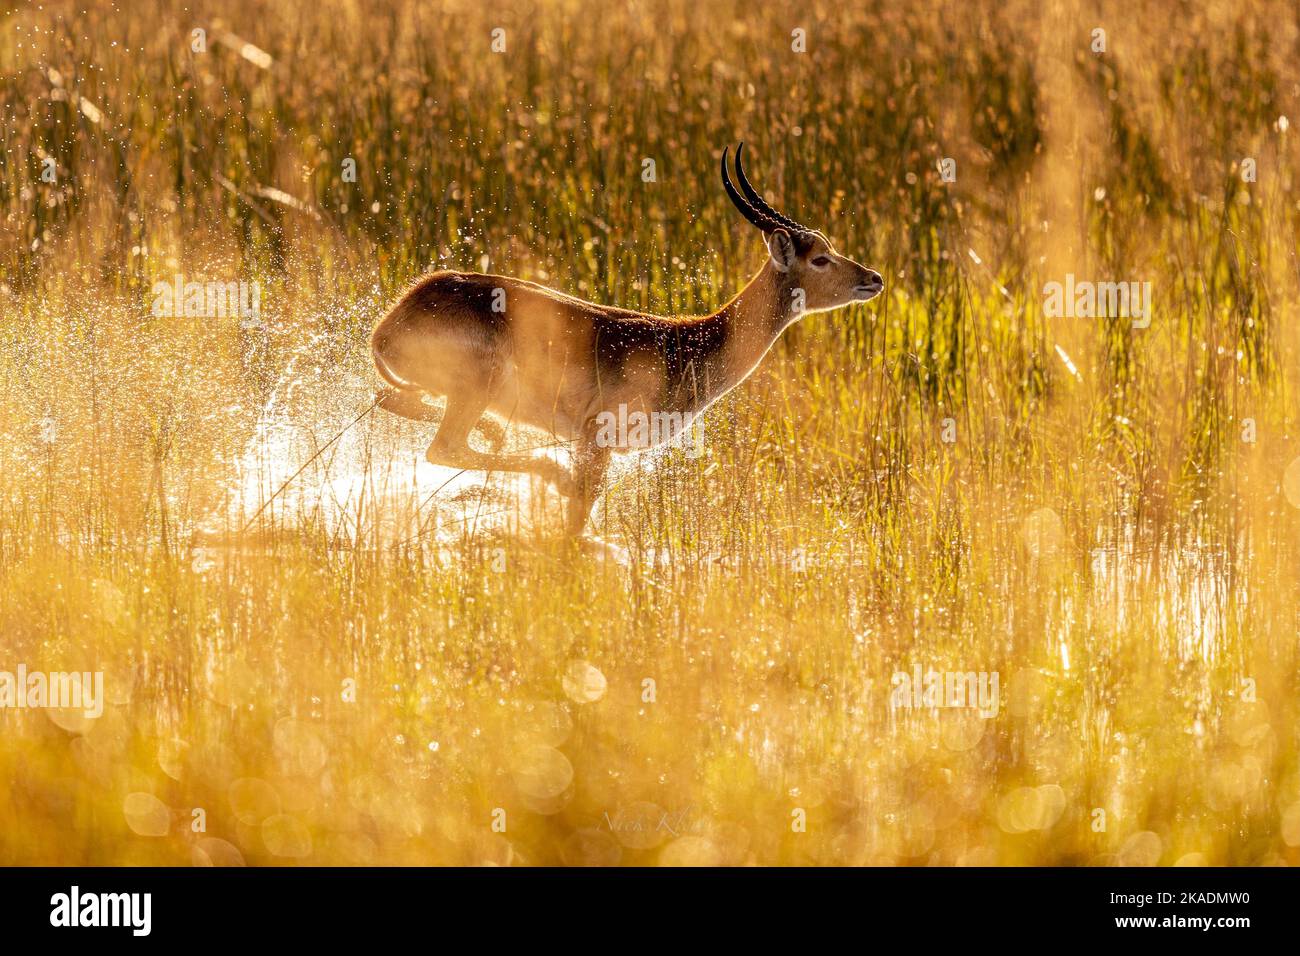 A lechwe running across the water, photographed on Safari in Botswana Stock Photo